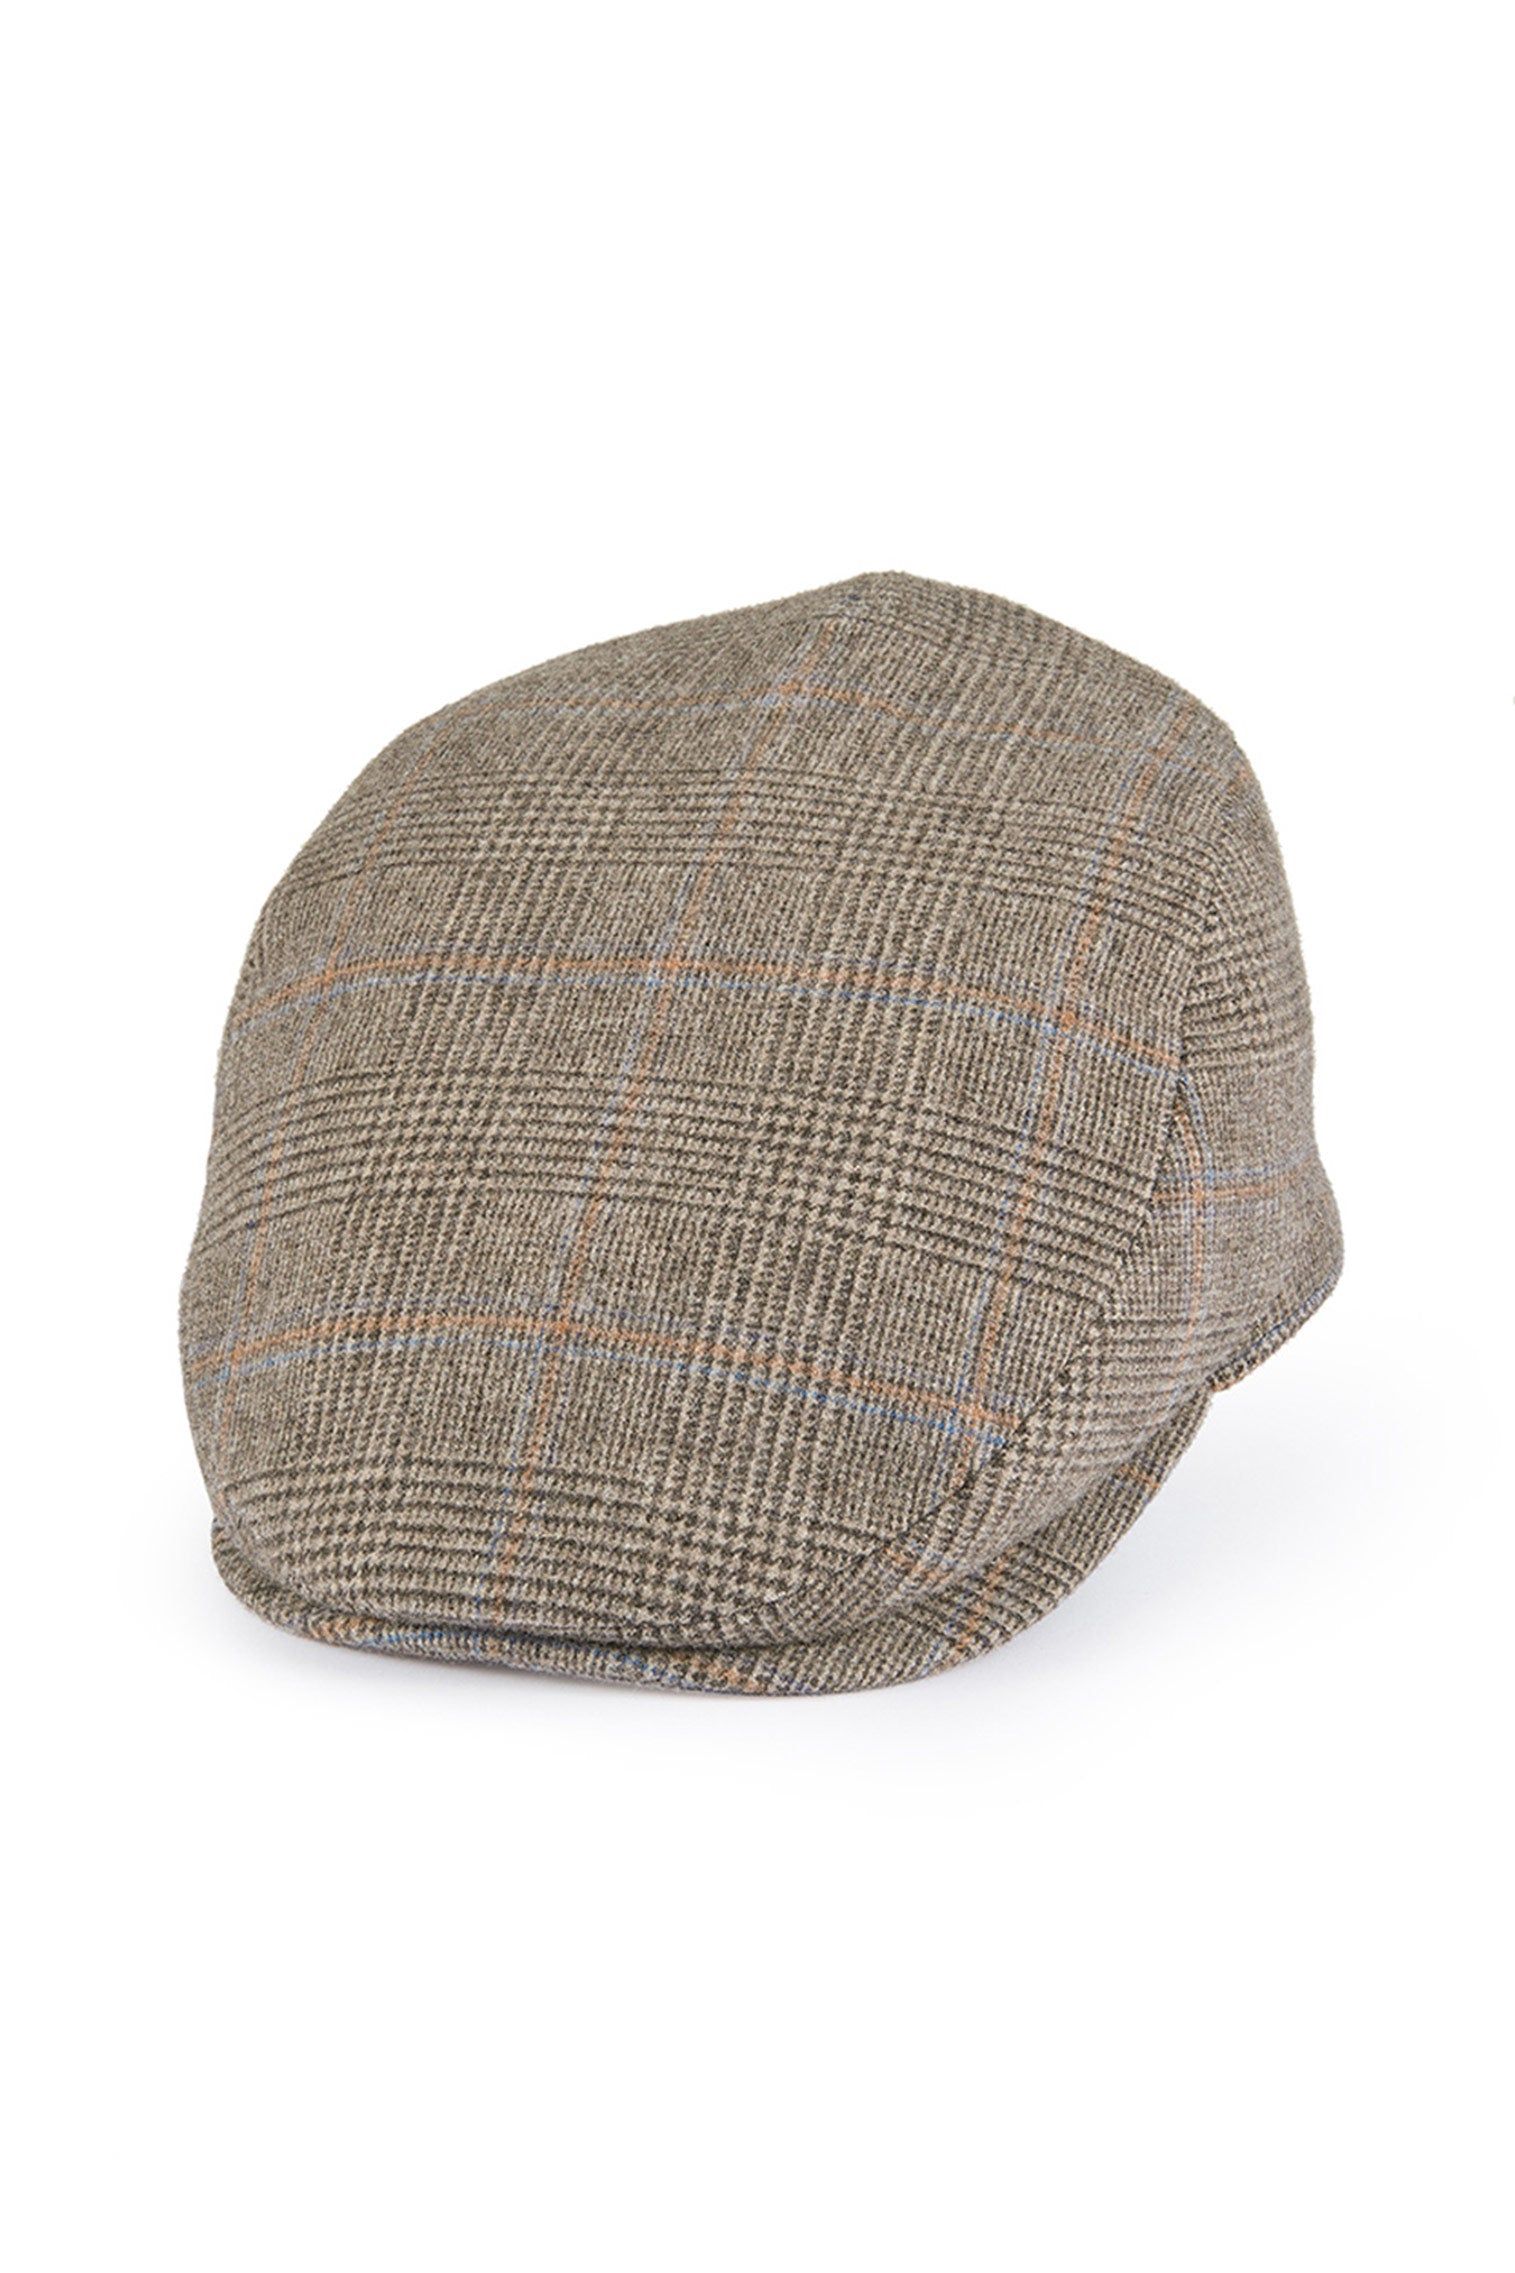 Escorial Wool Grosvenor Flat Cap - Men's Hats - Lock & Co. Hatters London UK